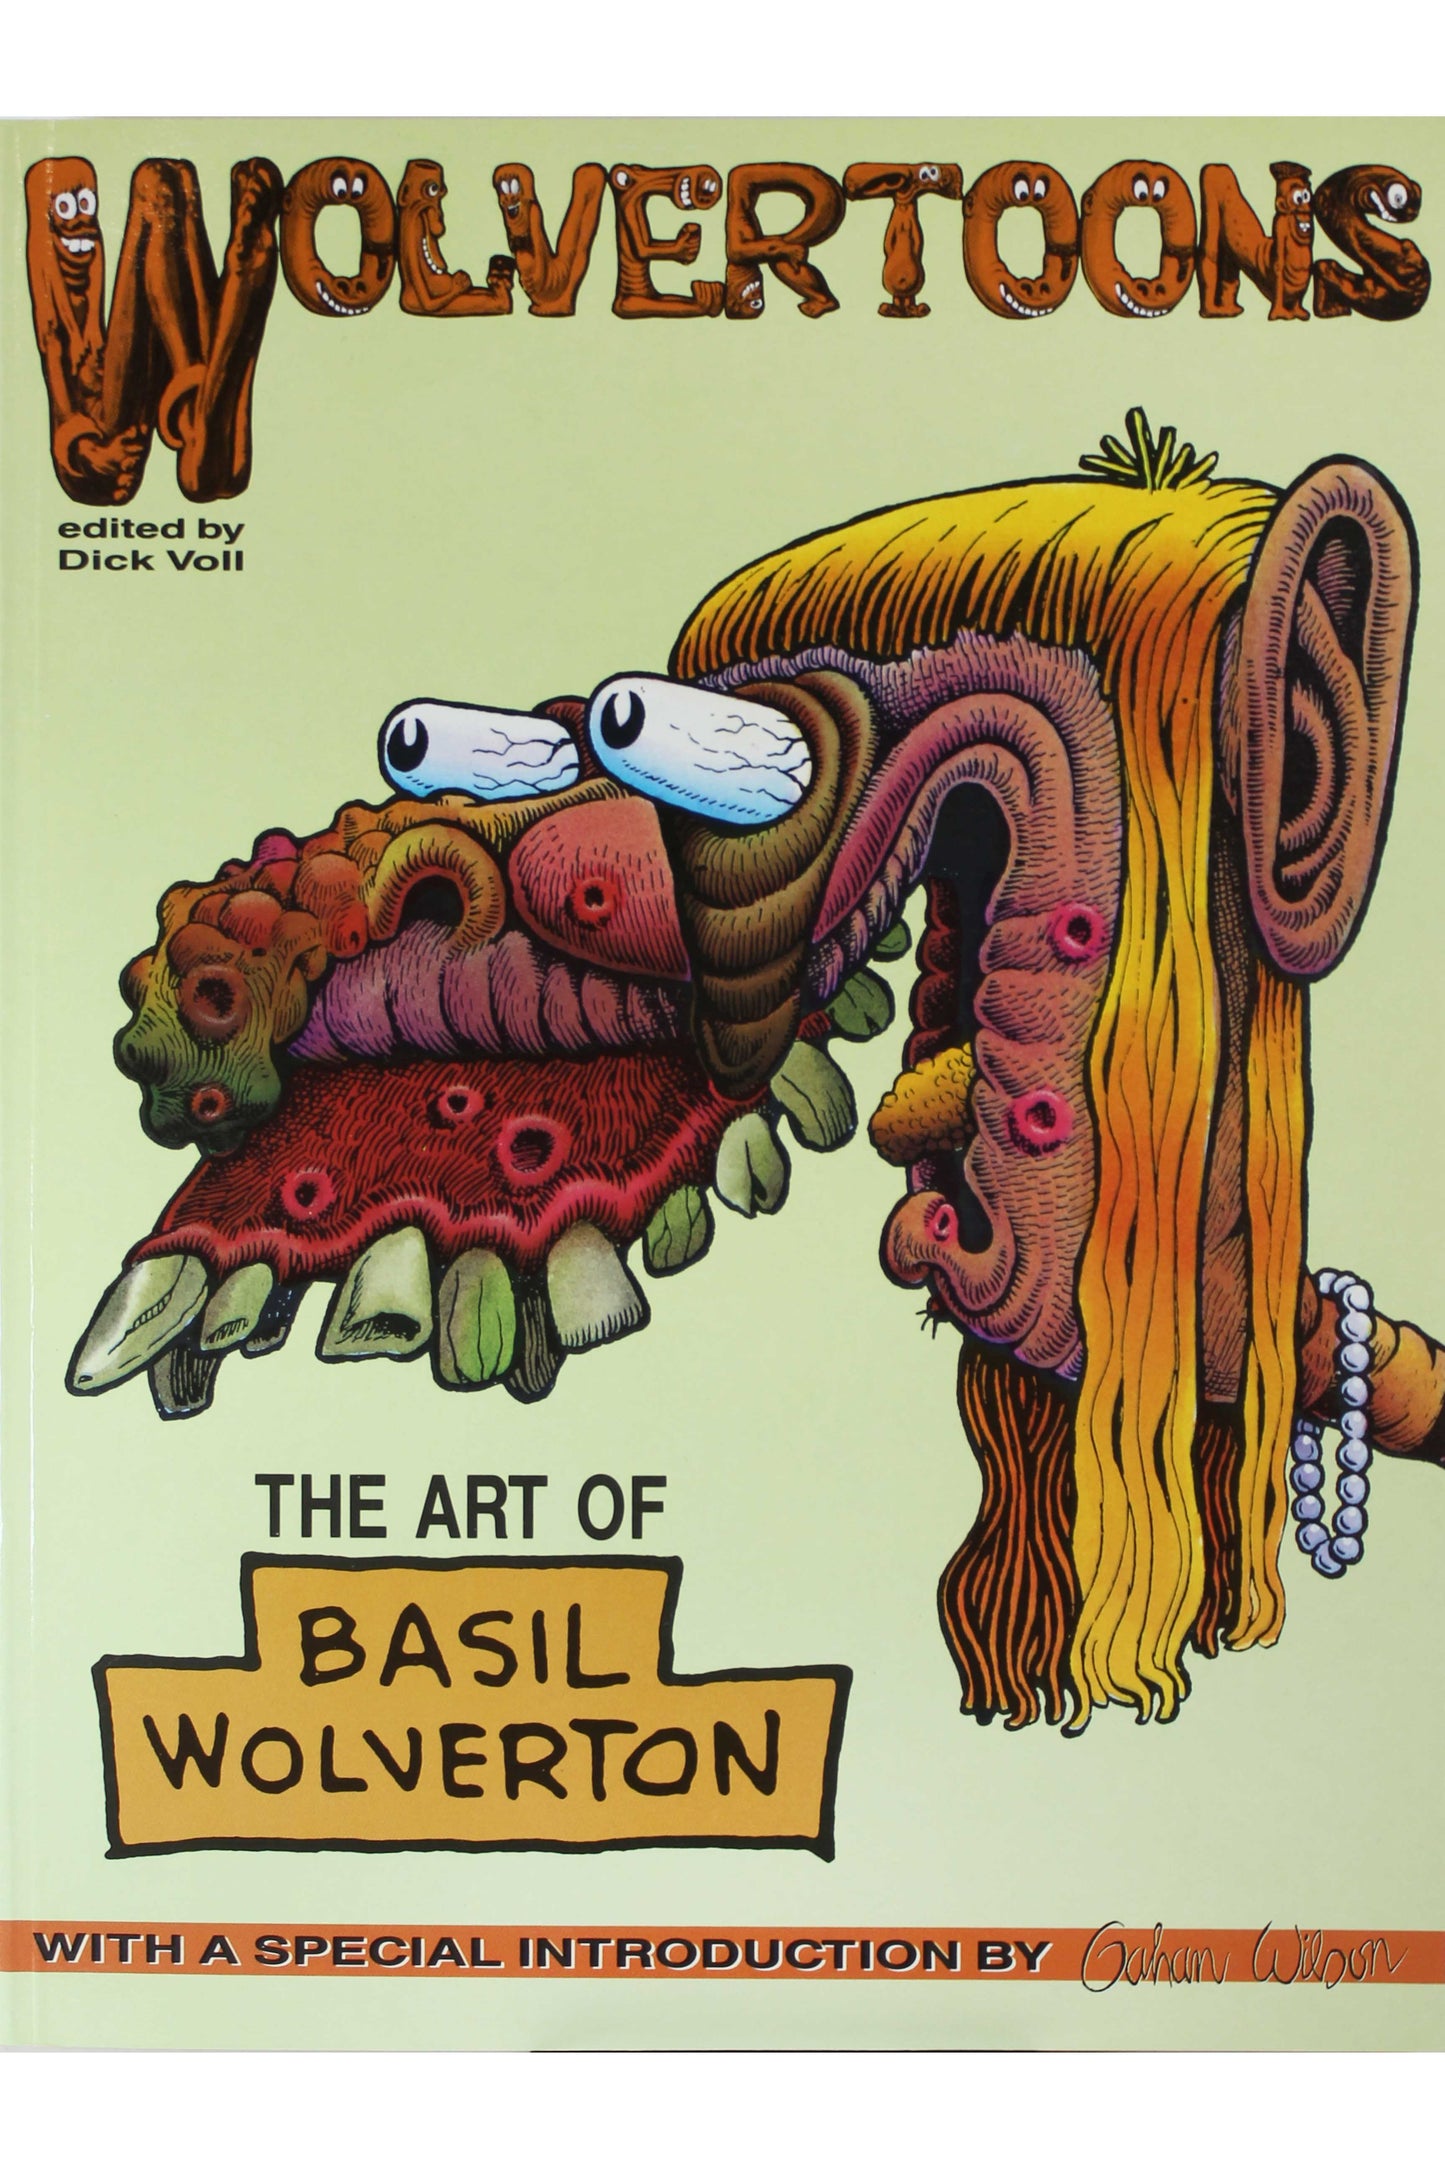 Wolvertoons - The Art of Basil Wolverton